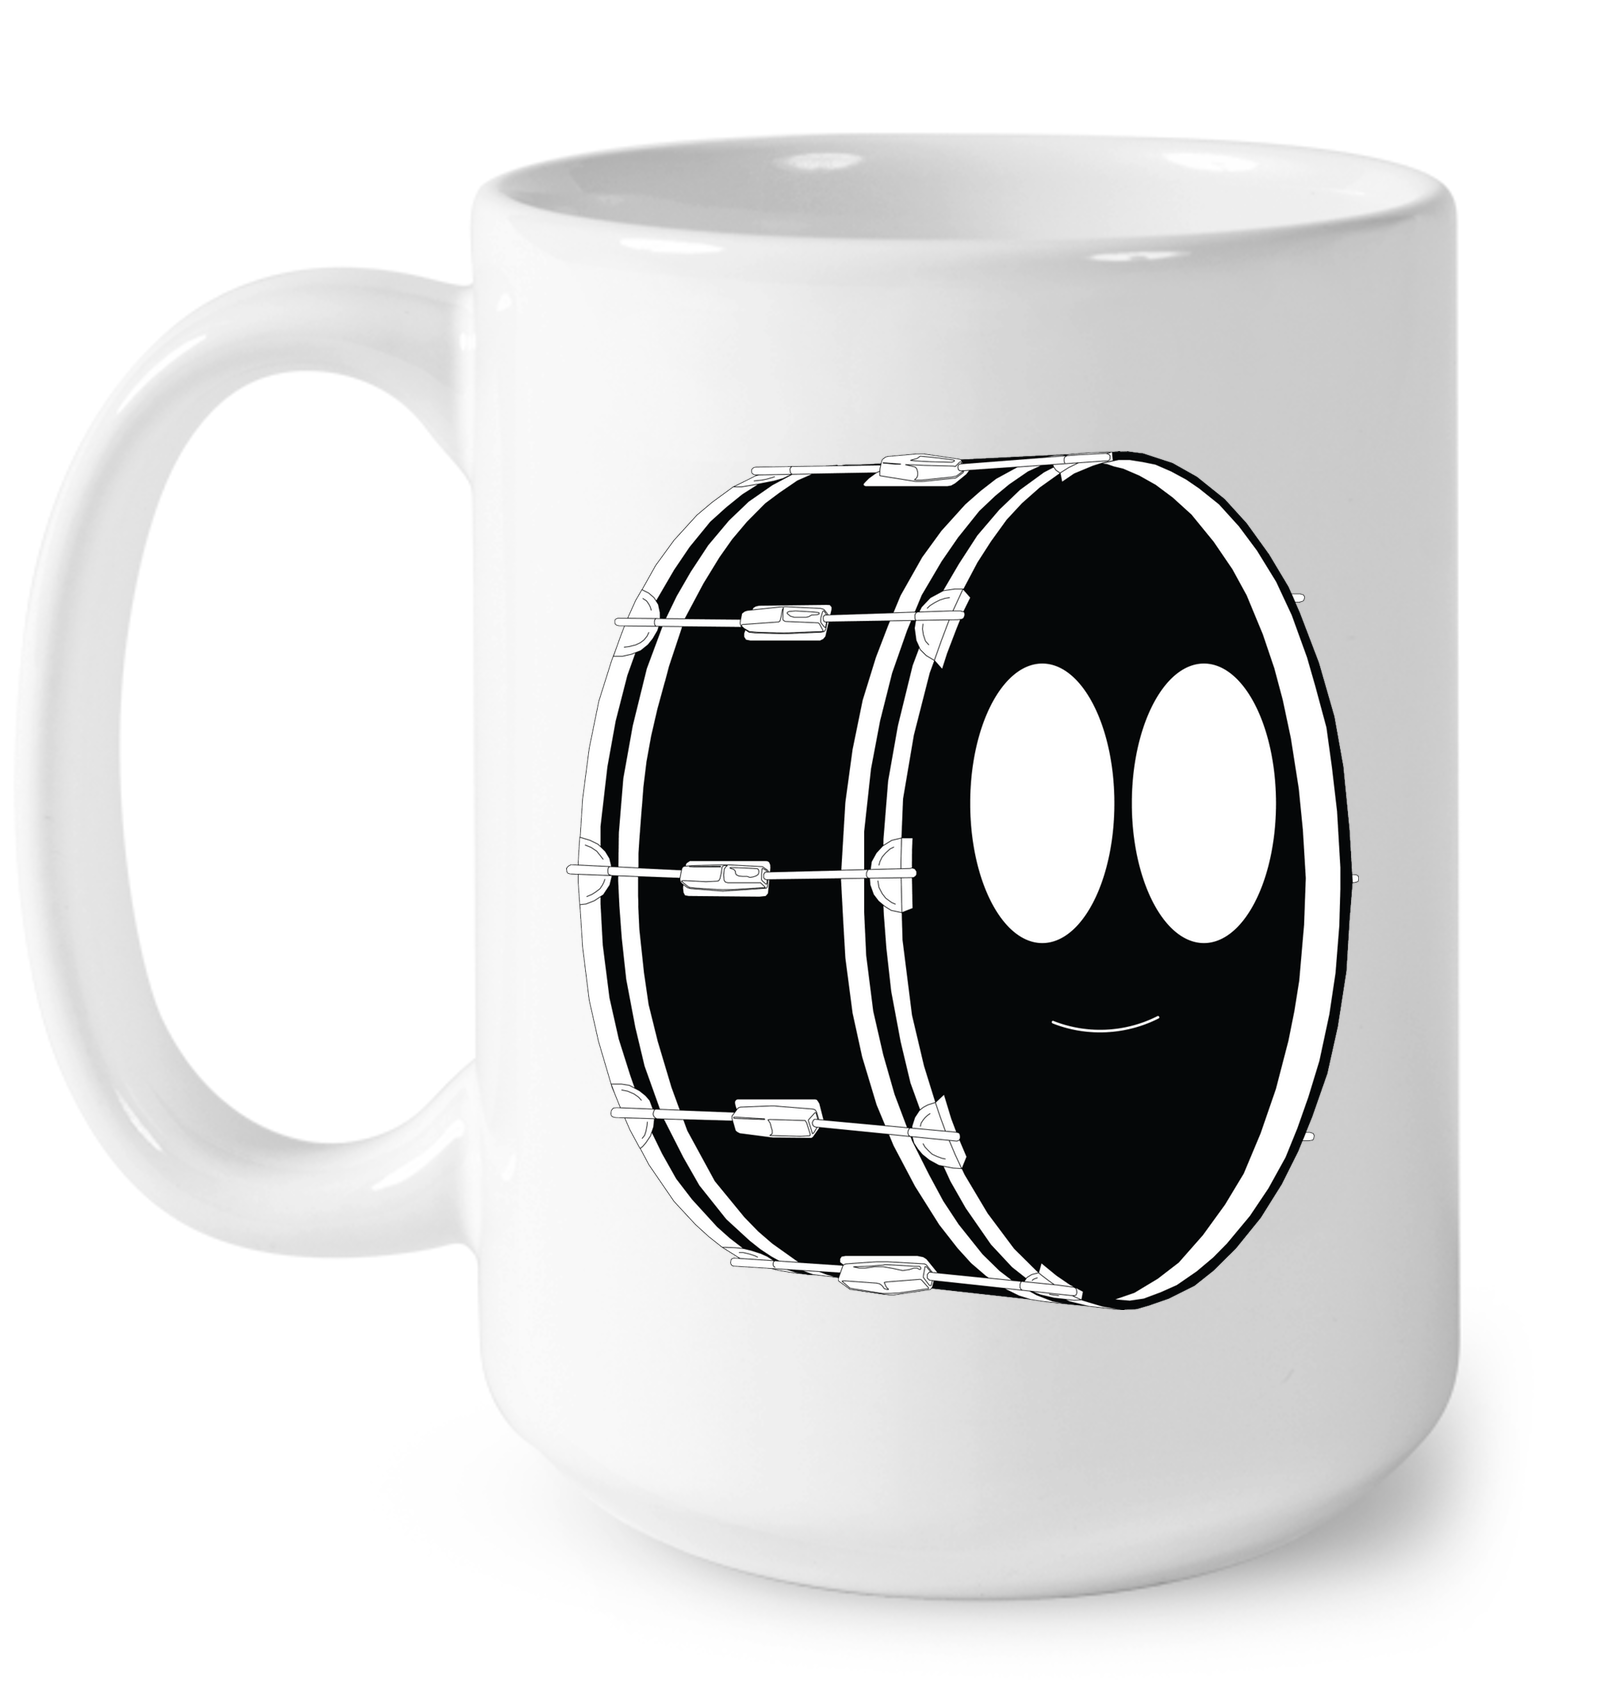 Bass Drum - Ceramic Mug